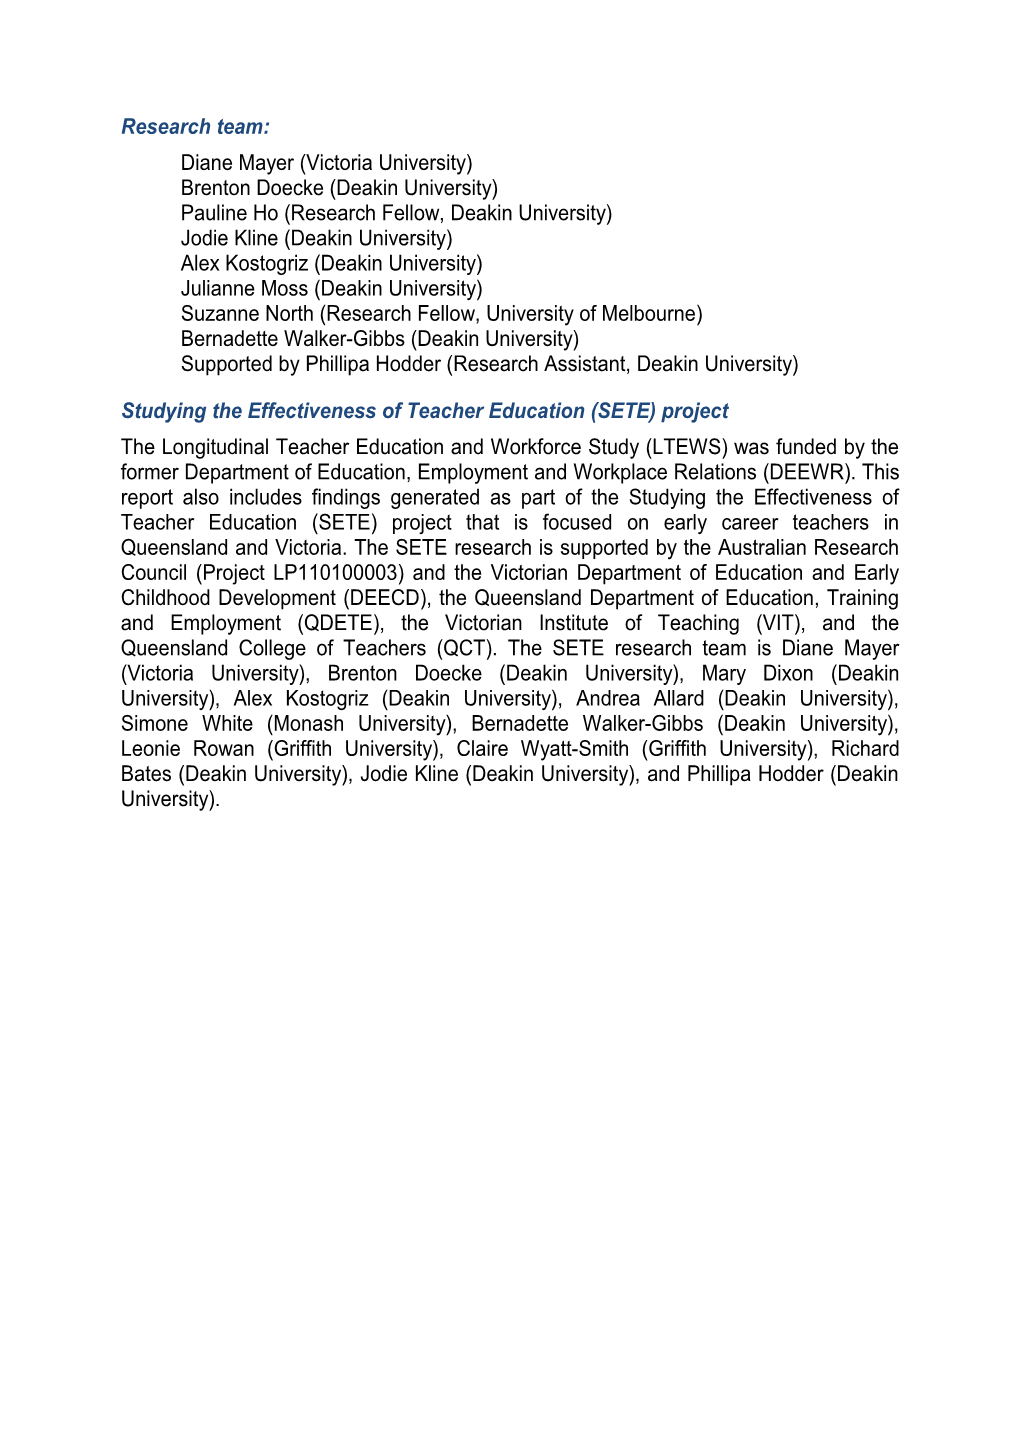 Longitudinal Teacher Education and Workforce Study (LTEWS) Final Report